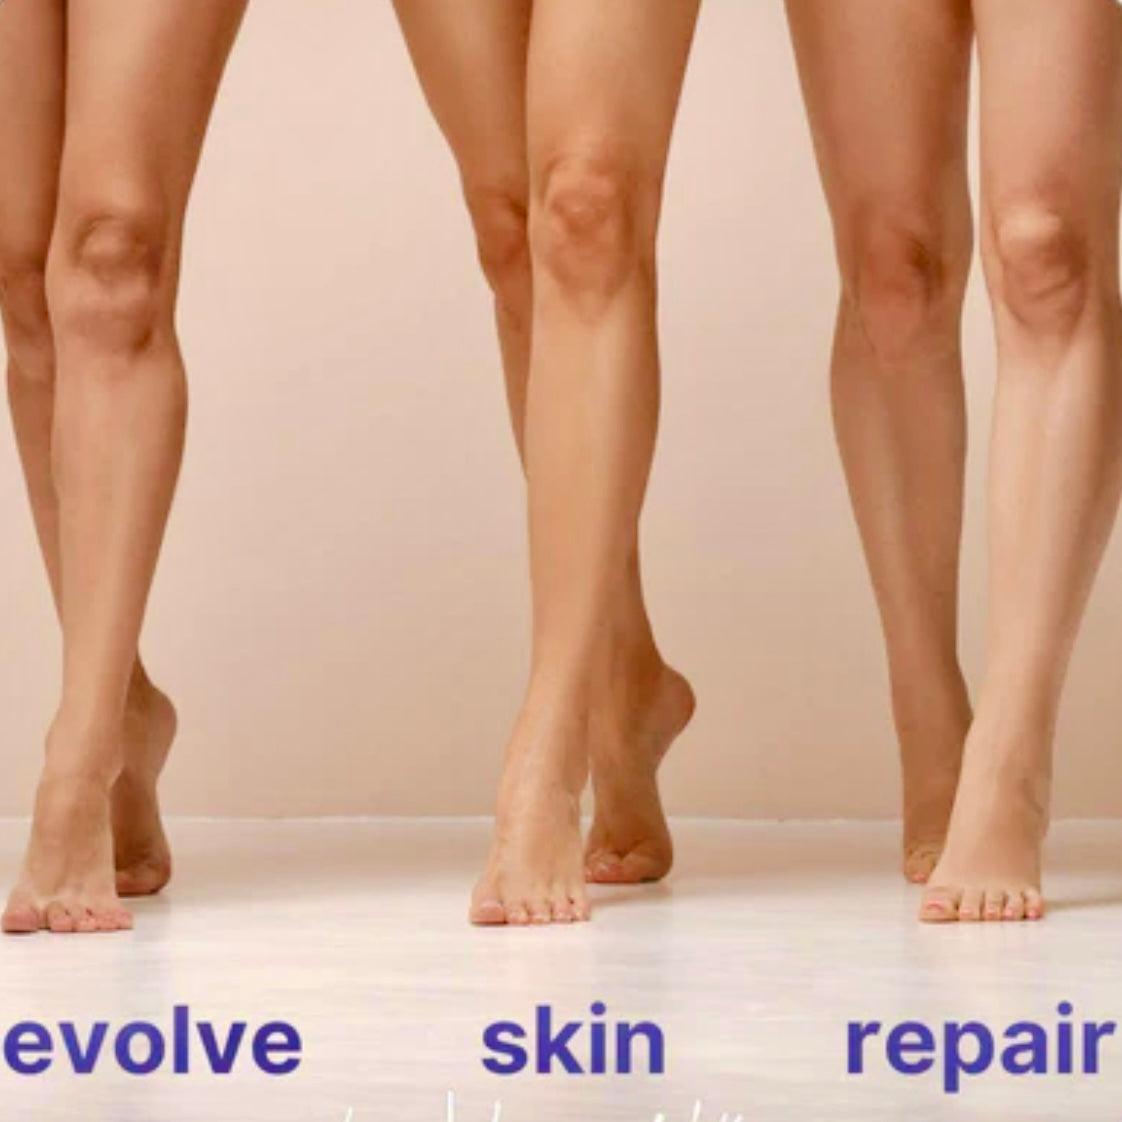 Evolve Skin Repair - Noble Body